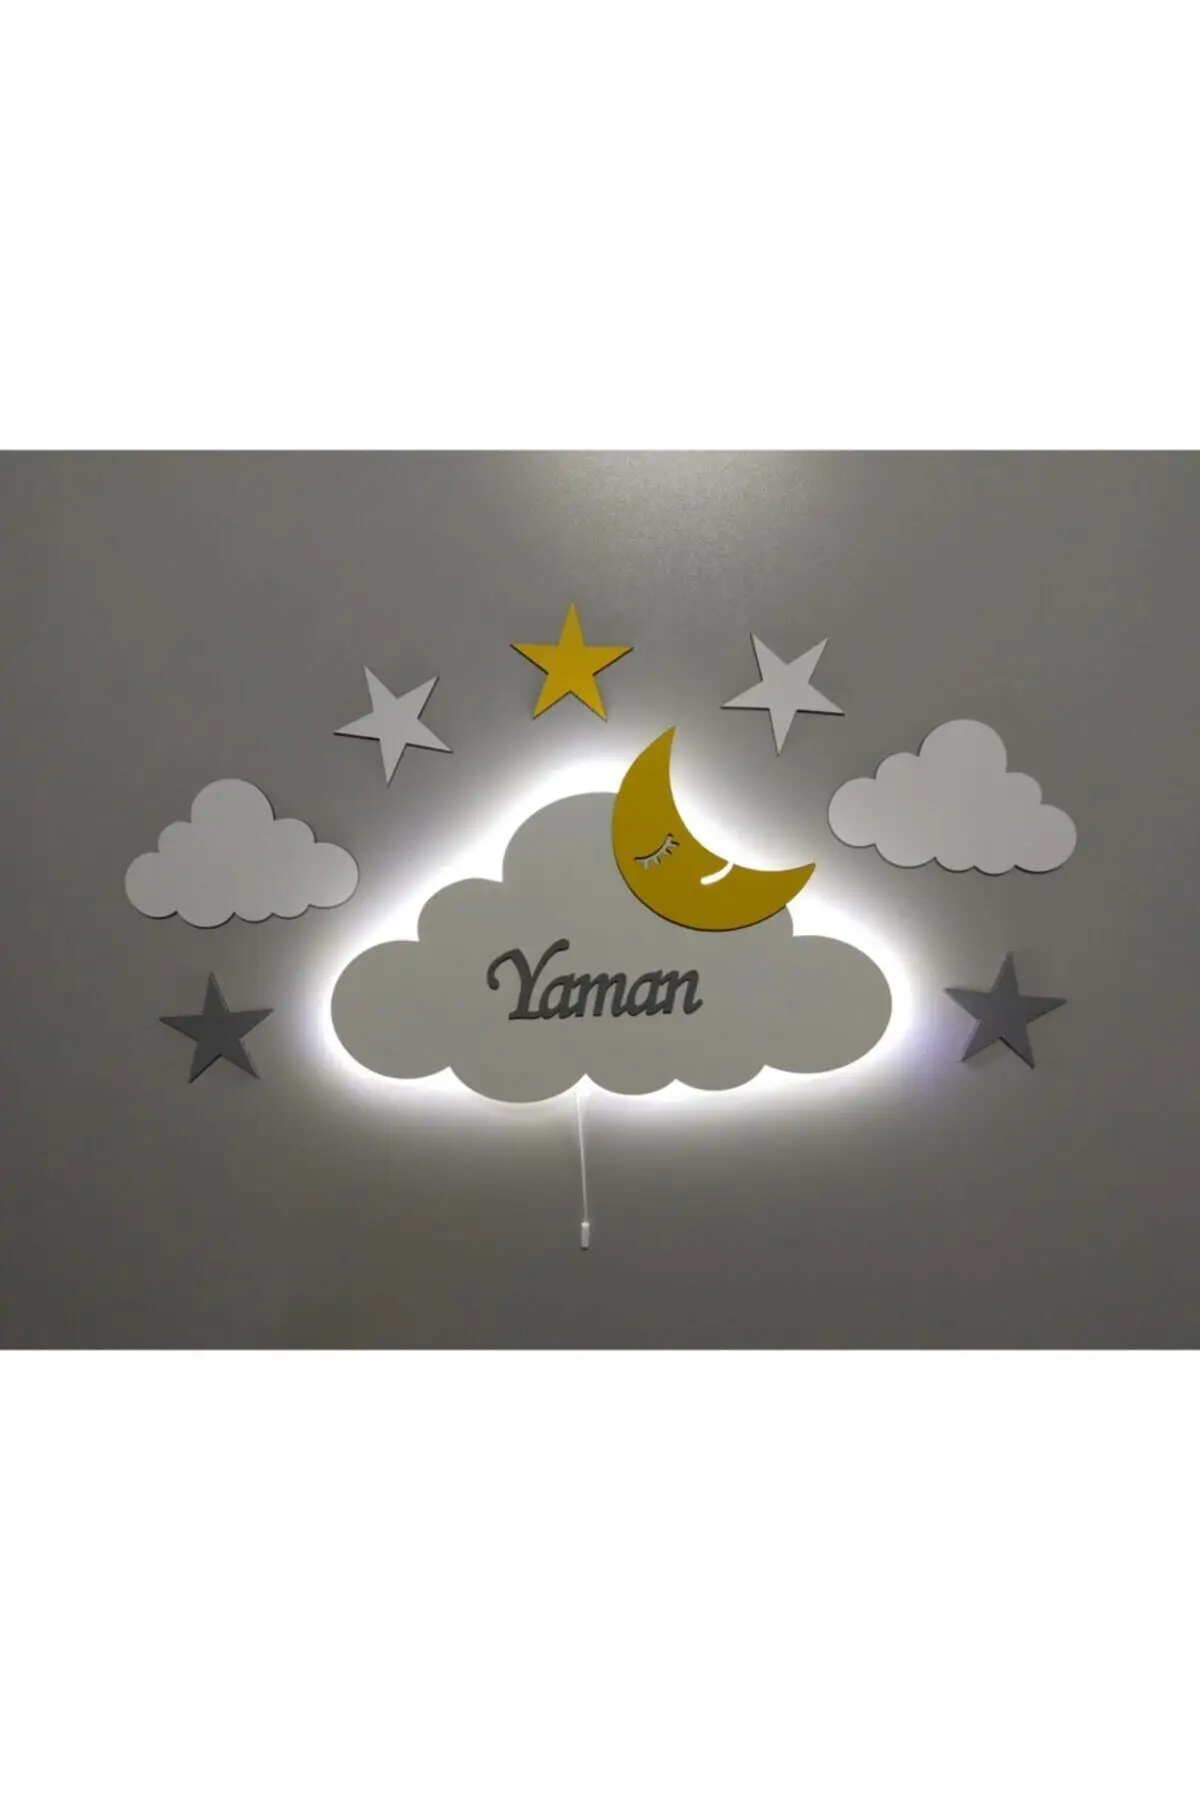 Kids Room Name Custom made Decorative Wood Cloud Night light Led Lighting Stylish Appearance Baby Room Design